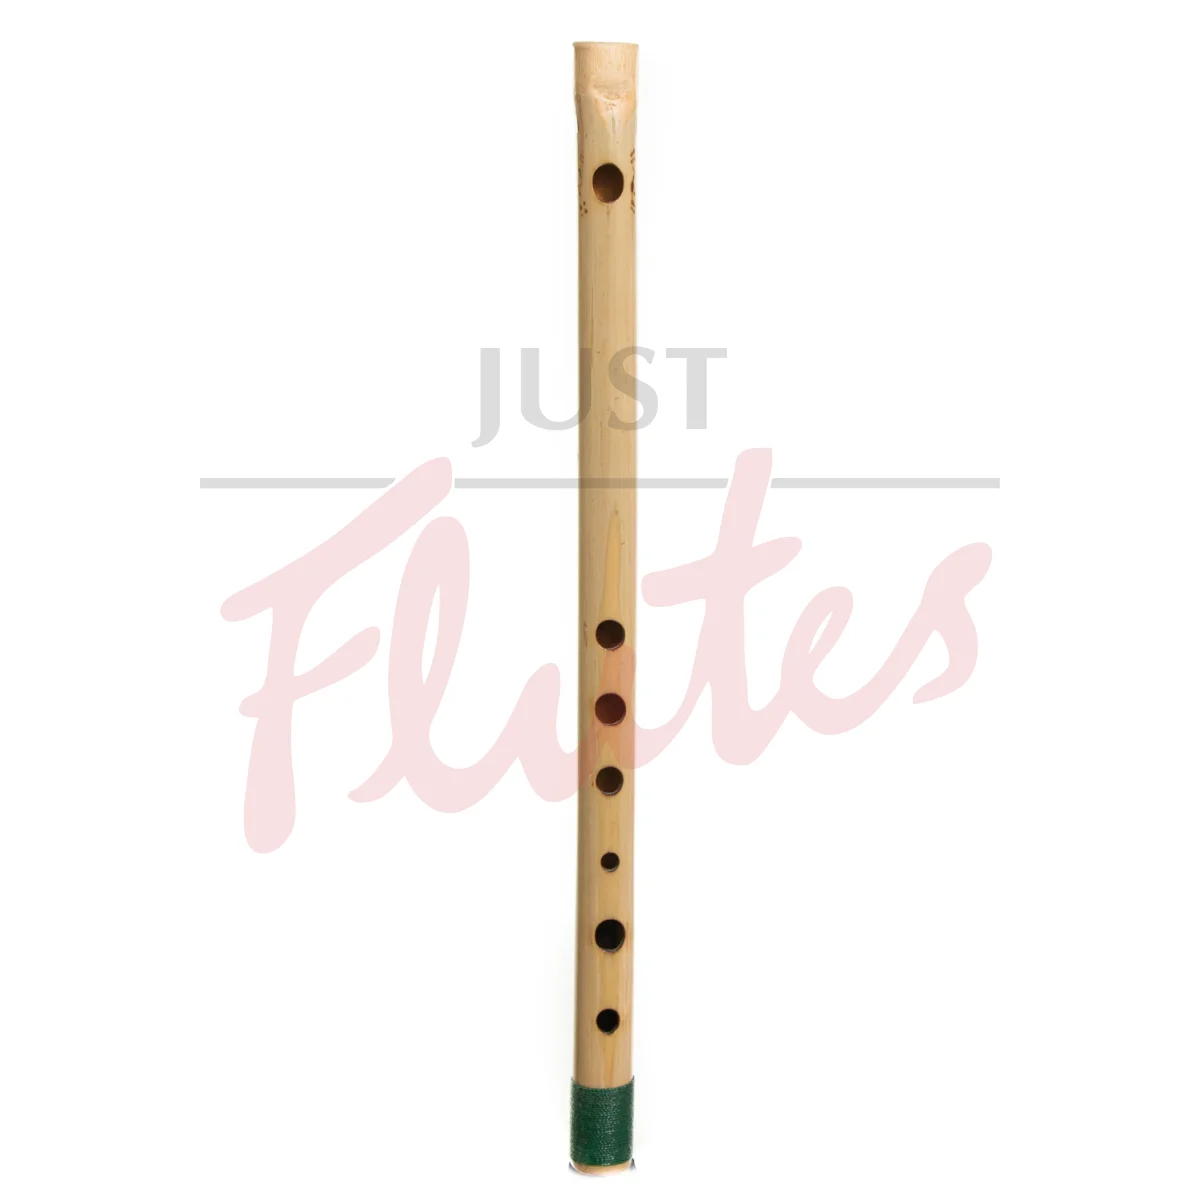 Aizen Pifano Bamboo Traditional Brazilian Flute in A